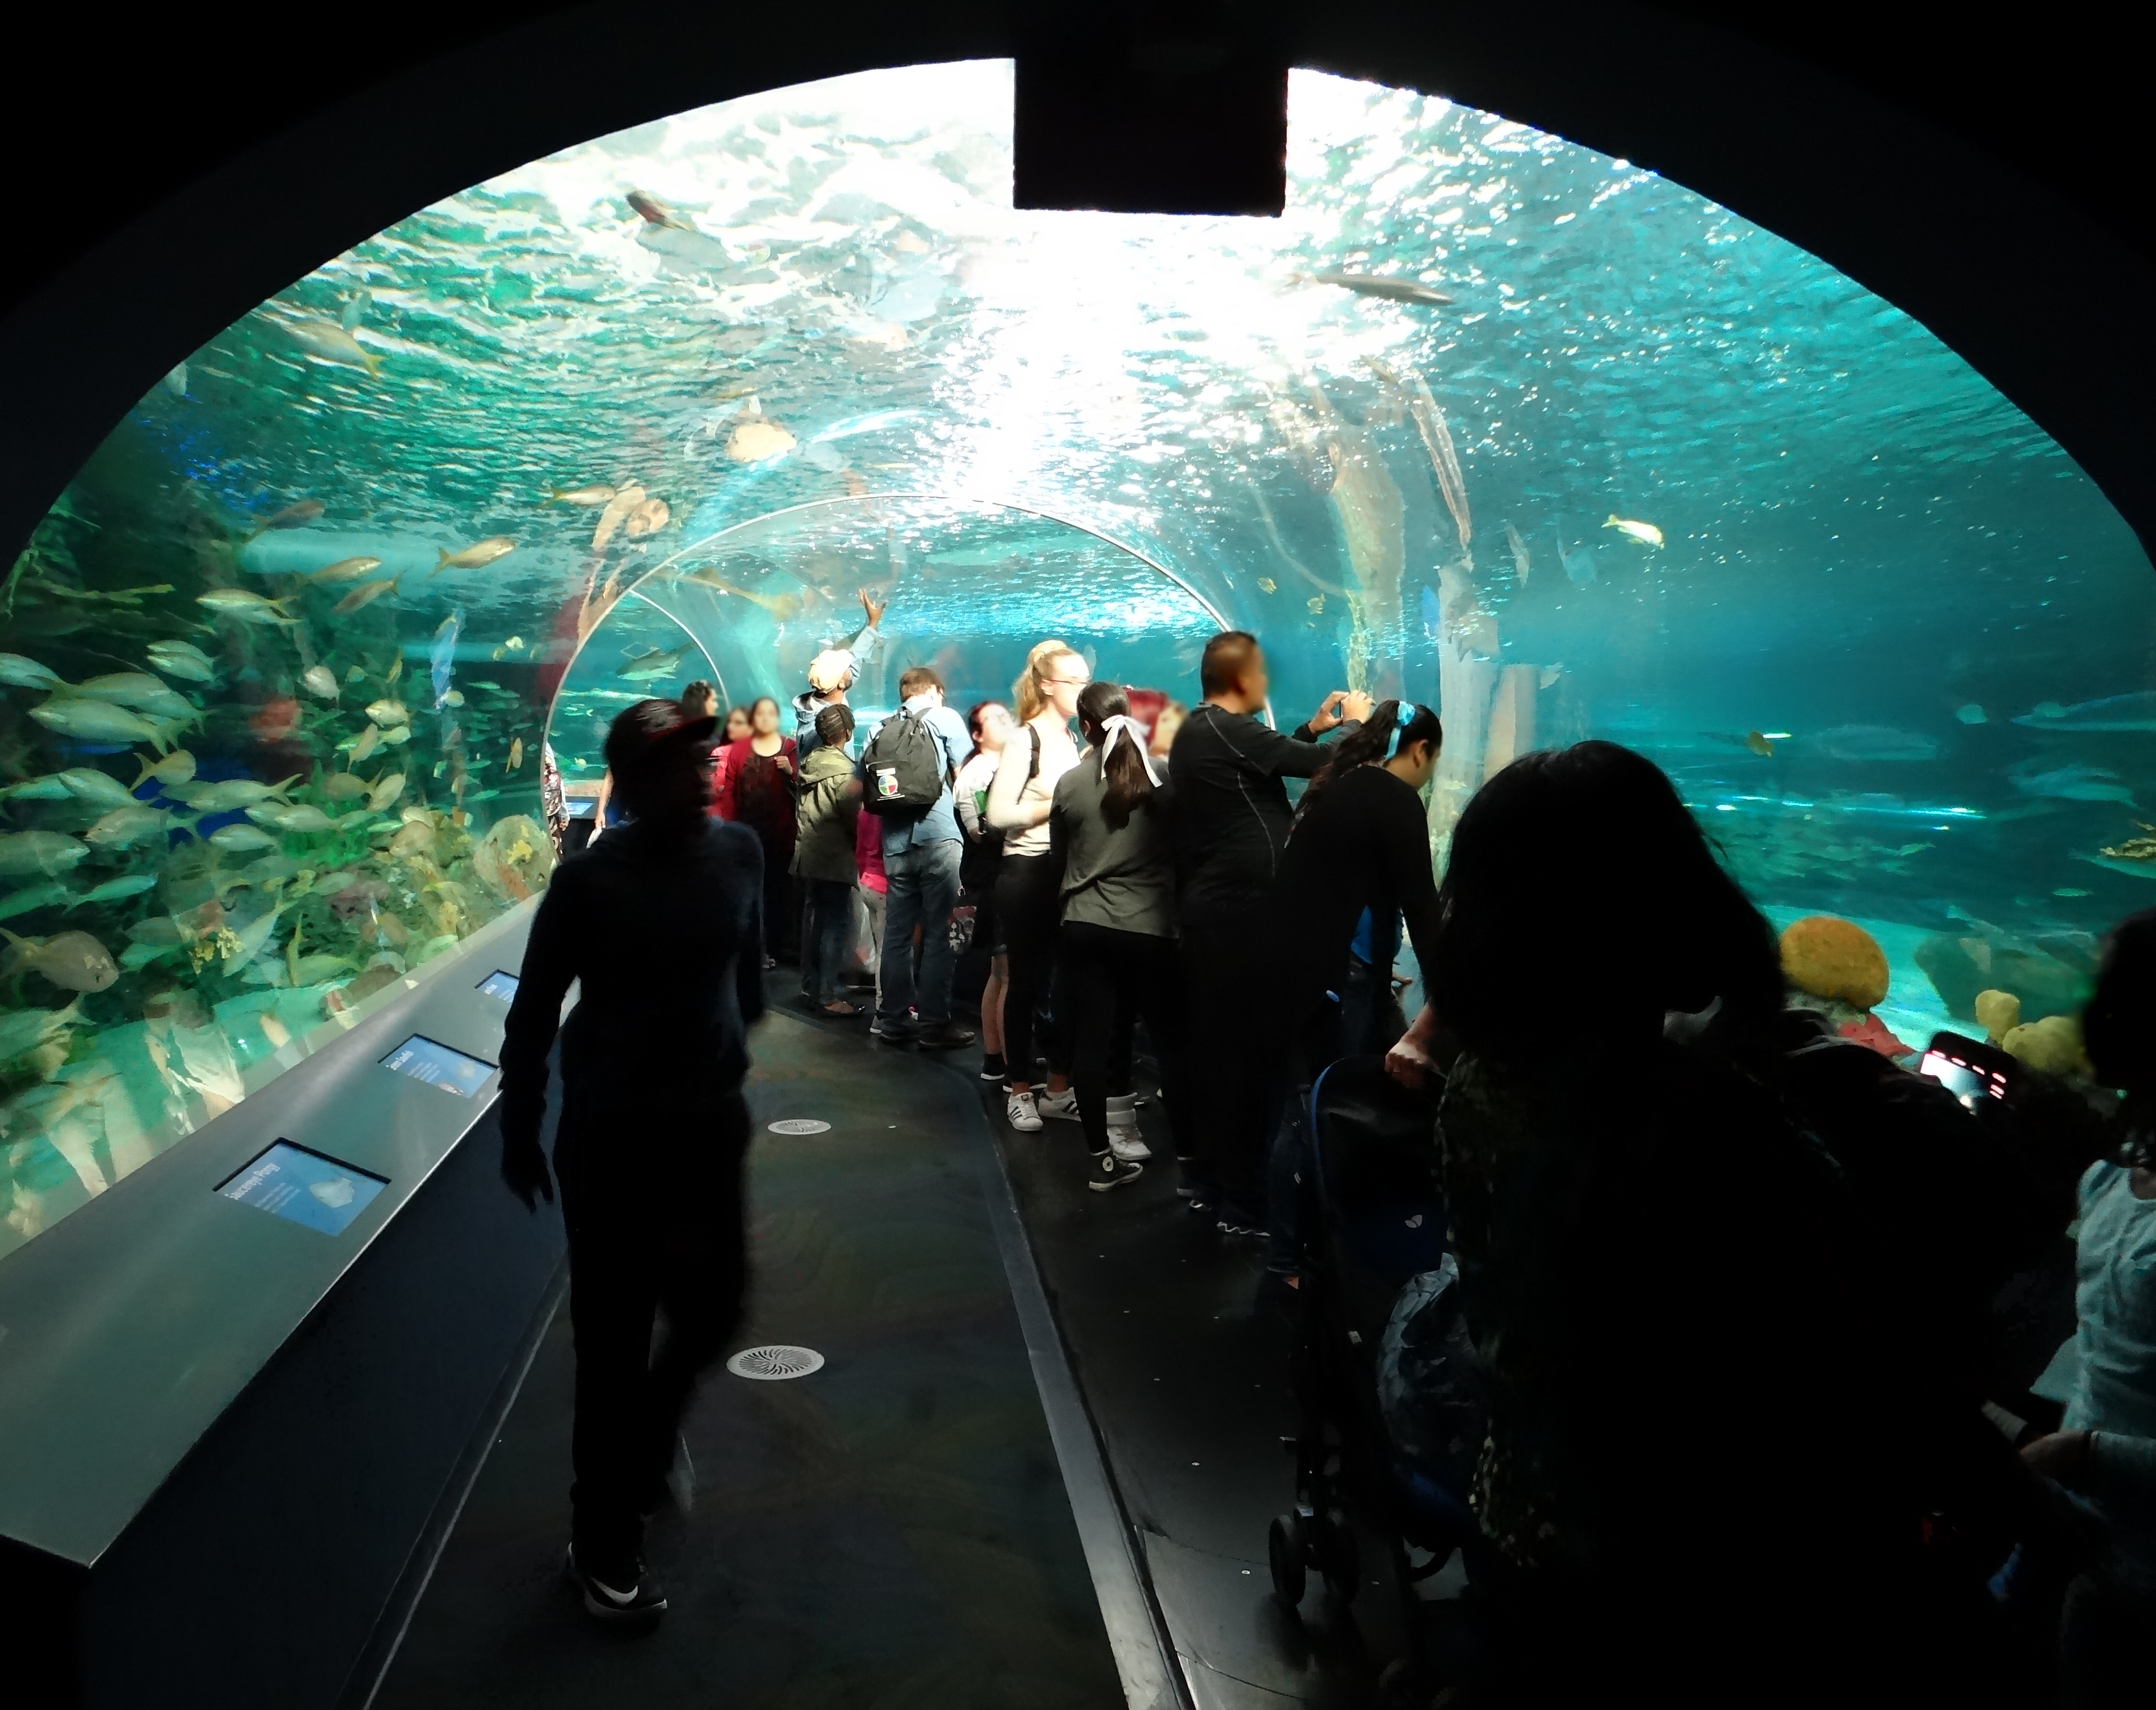 Underwater viewing tunnel exhibit at Ripley's Aquarium in Toronto